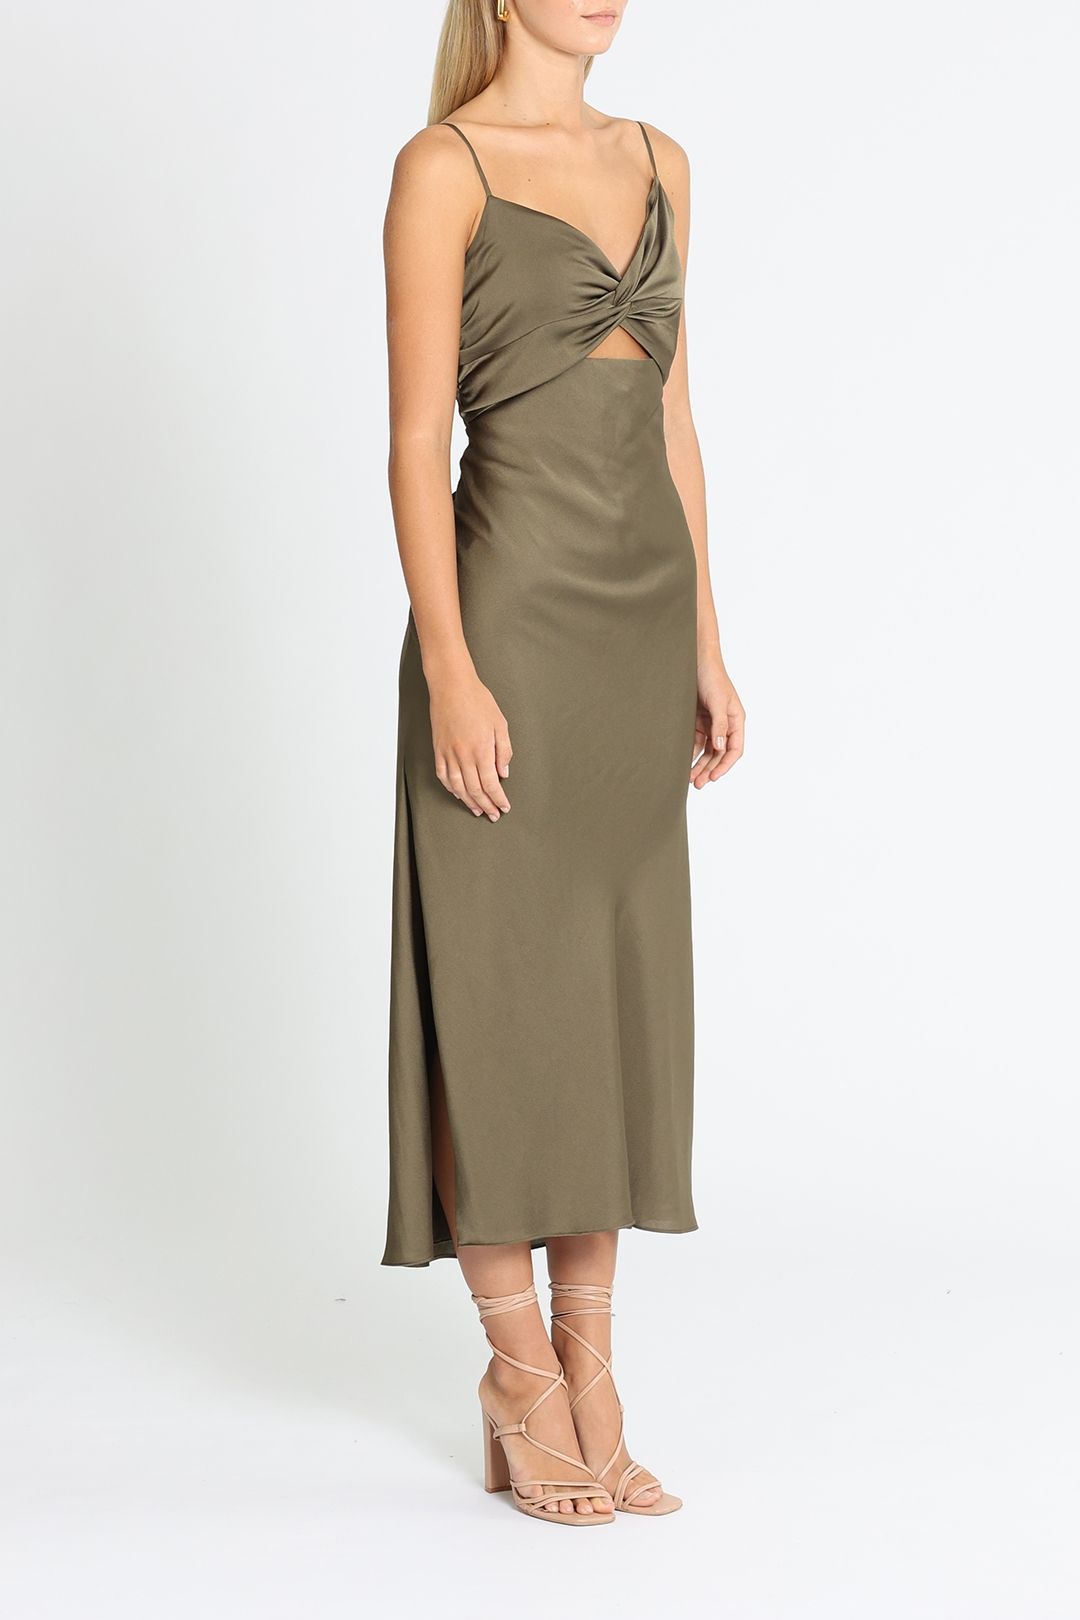 Shona Joy Luxe Twist Midi Dress Pine Cutout